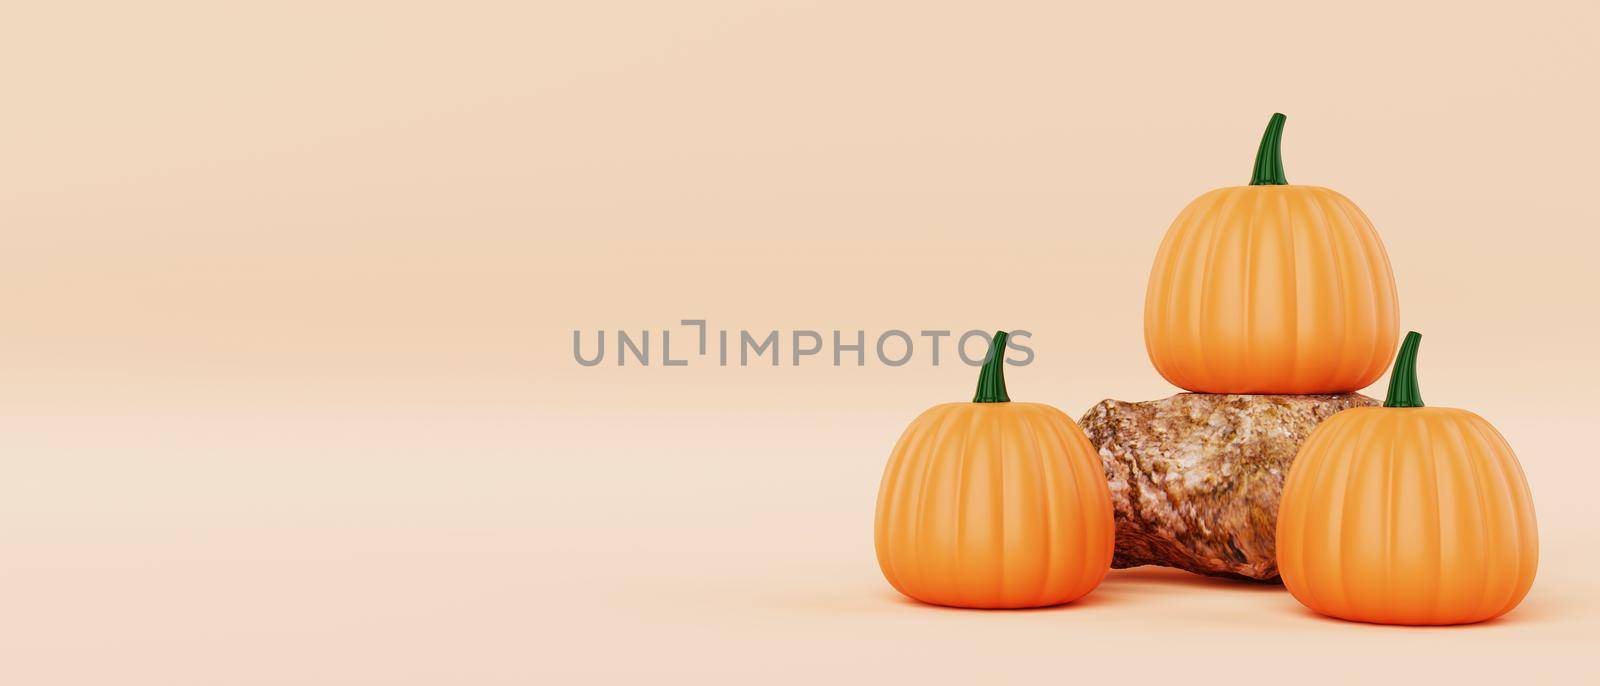 Pumpkins on the rock on orange background. Halloween and vegetable object concept. 3D illustration rendering